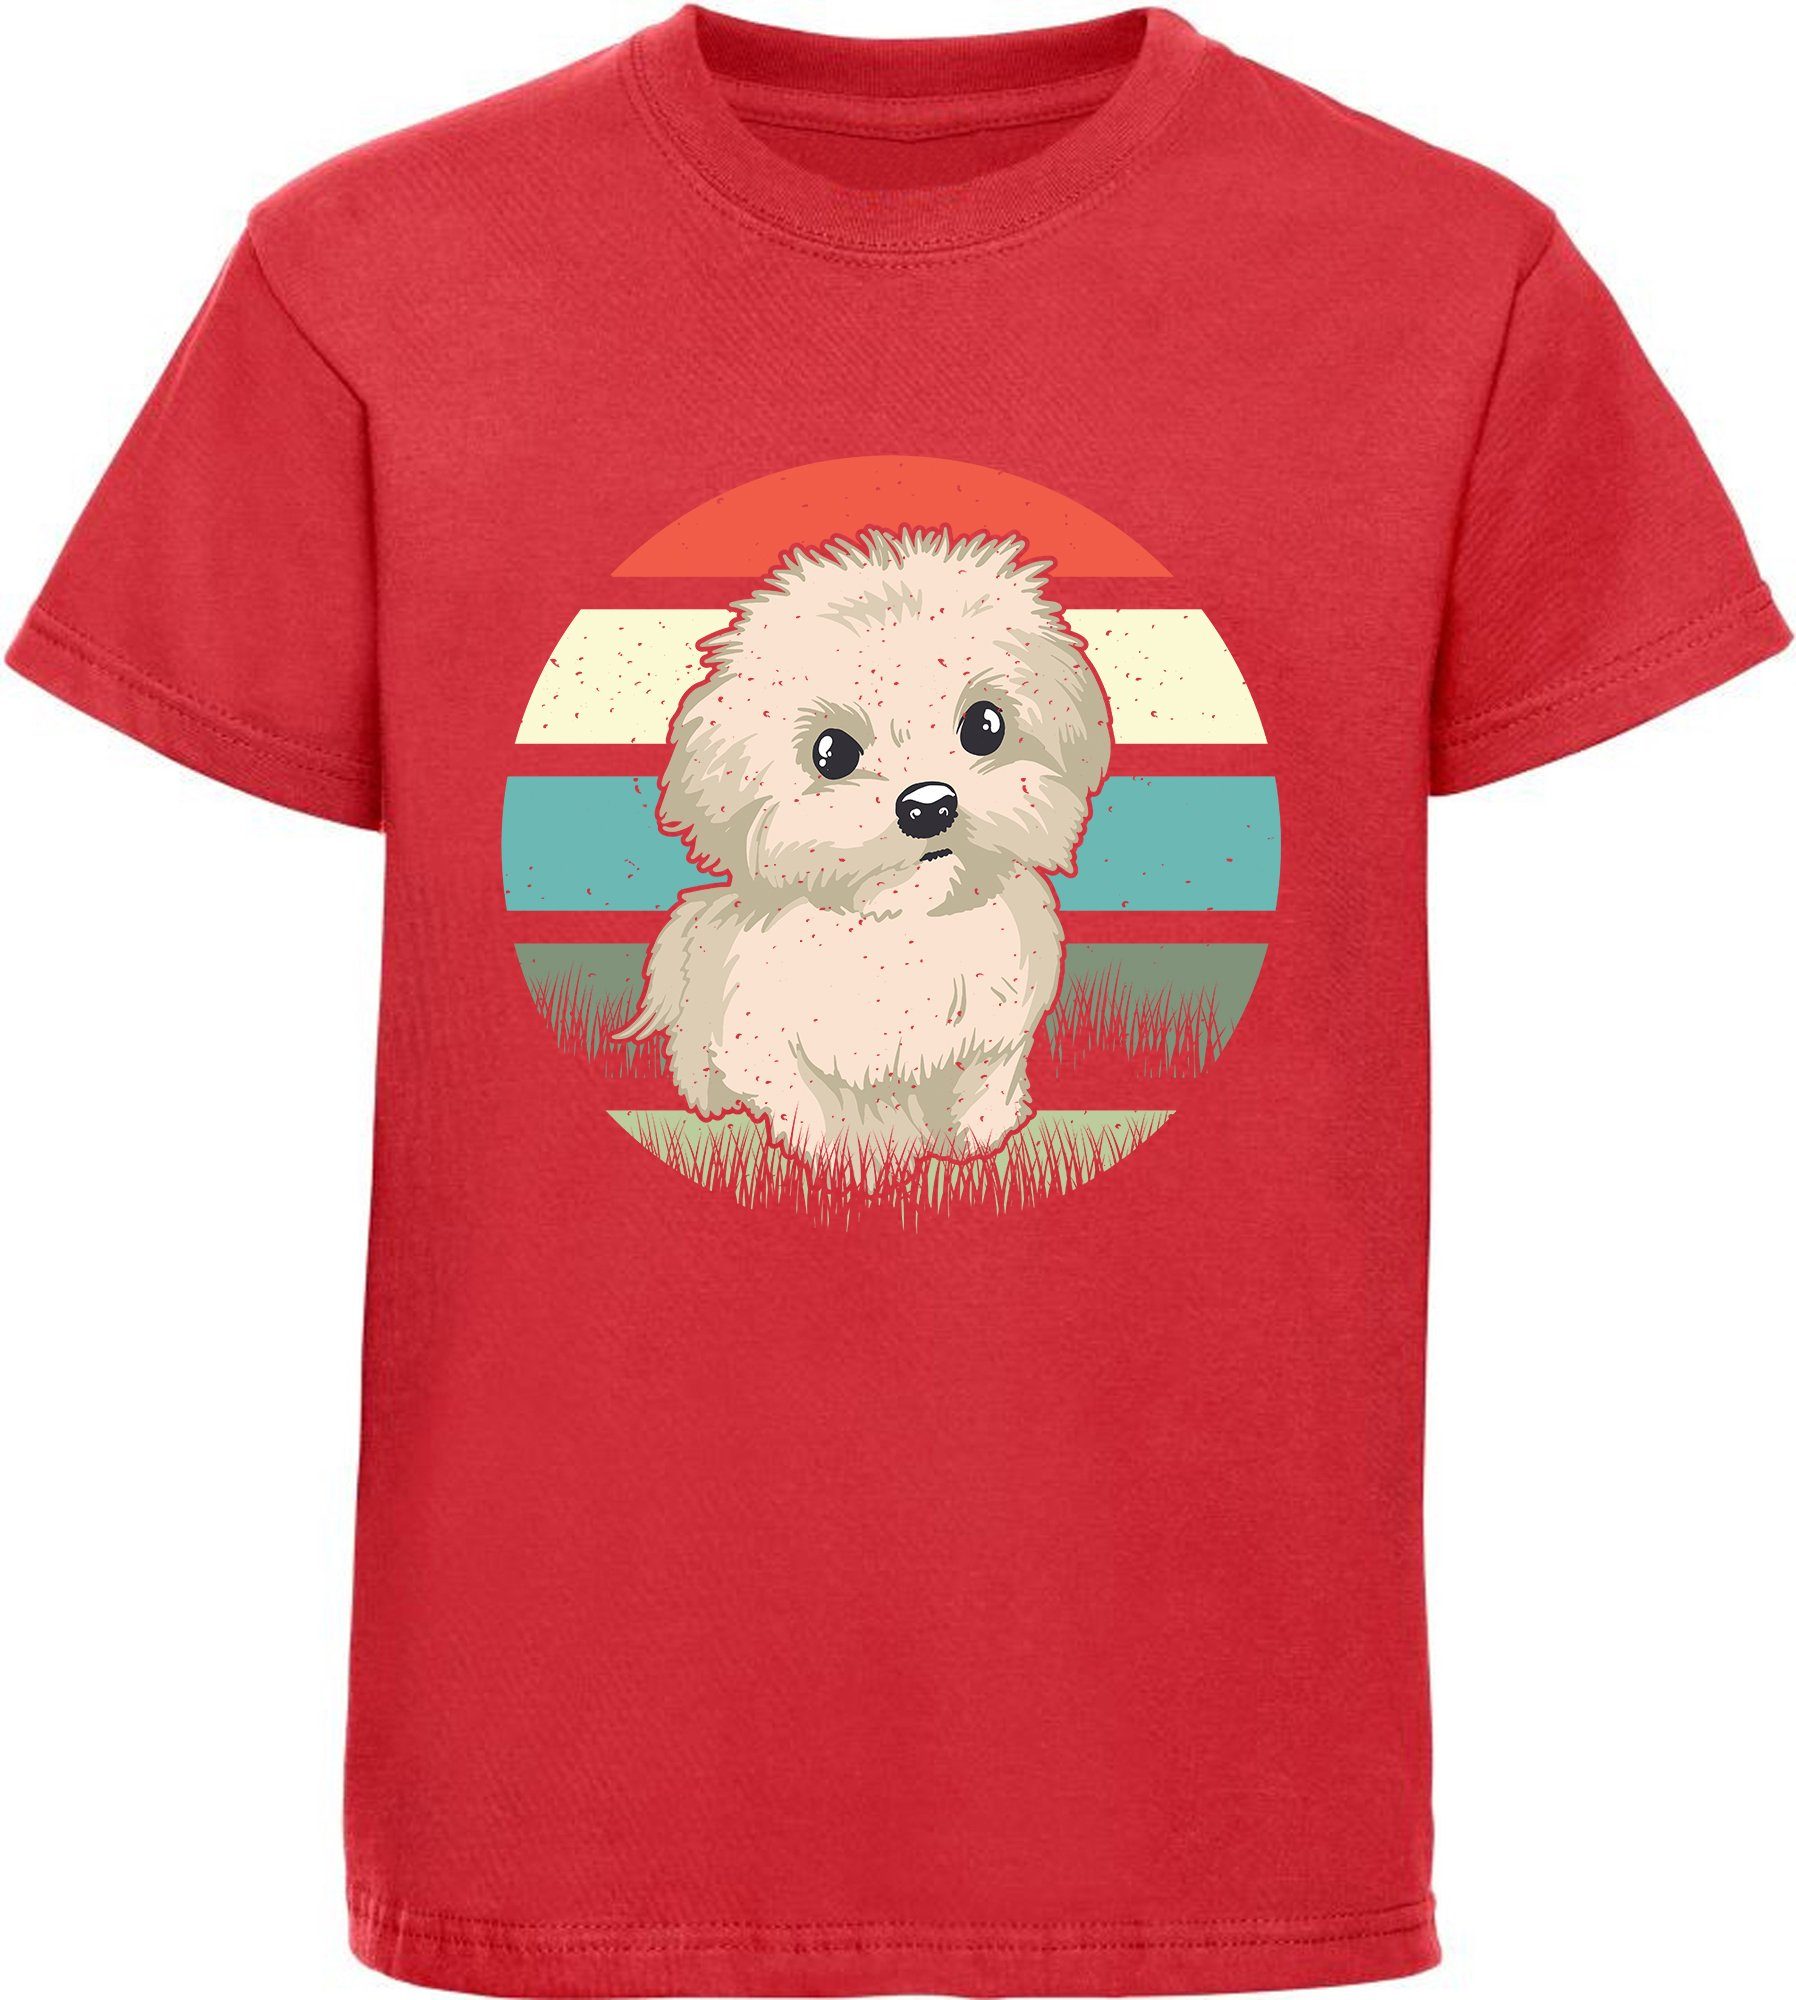 MyDesign24 Print-Shirt Kinder Hunde T-Shirt bedruckt - Retro Malteser Welpen Baumwollshirt mit Aufdruck, i242 rot